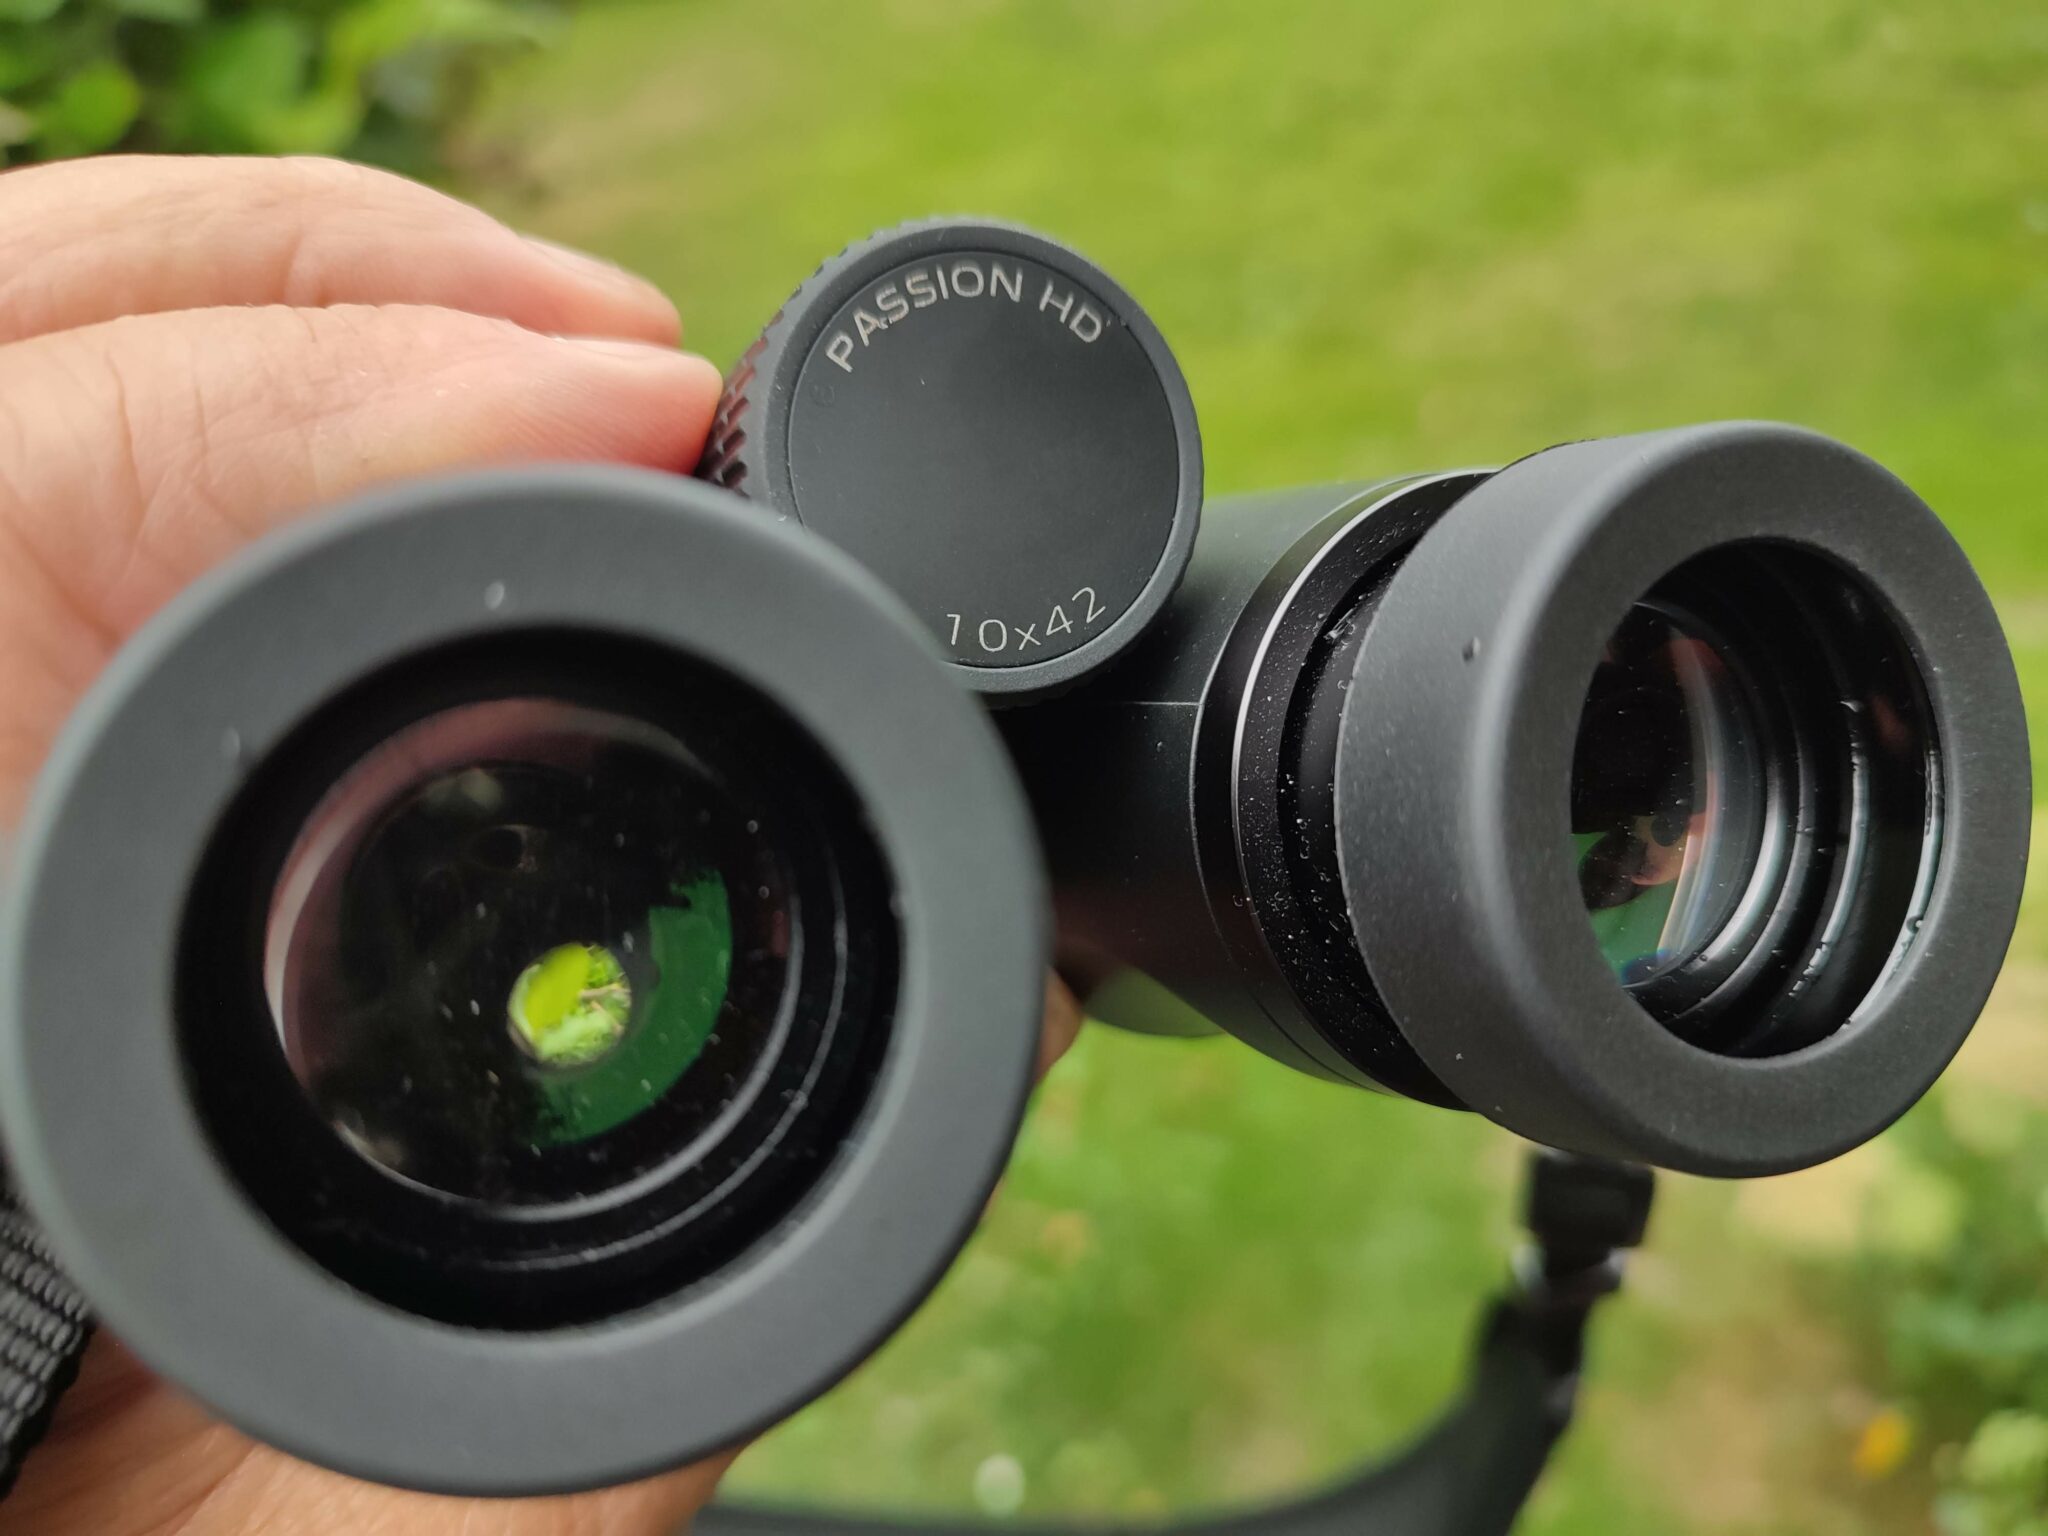 German Precision Optics Gpo Passion Hd 10x42 Binocular Review